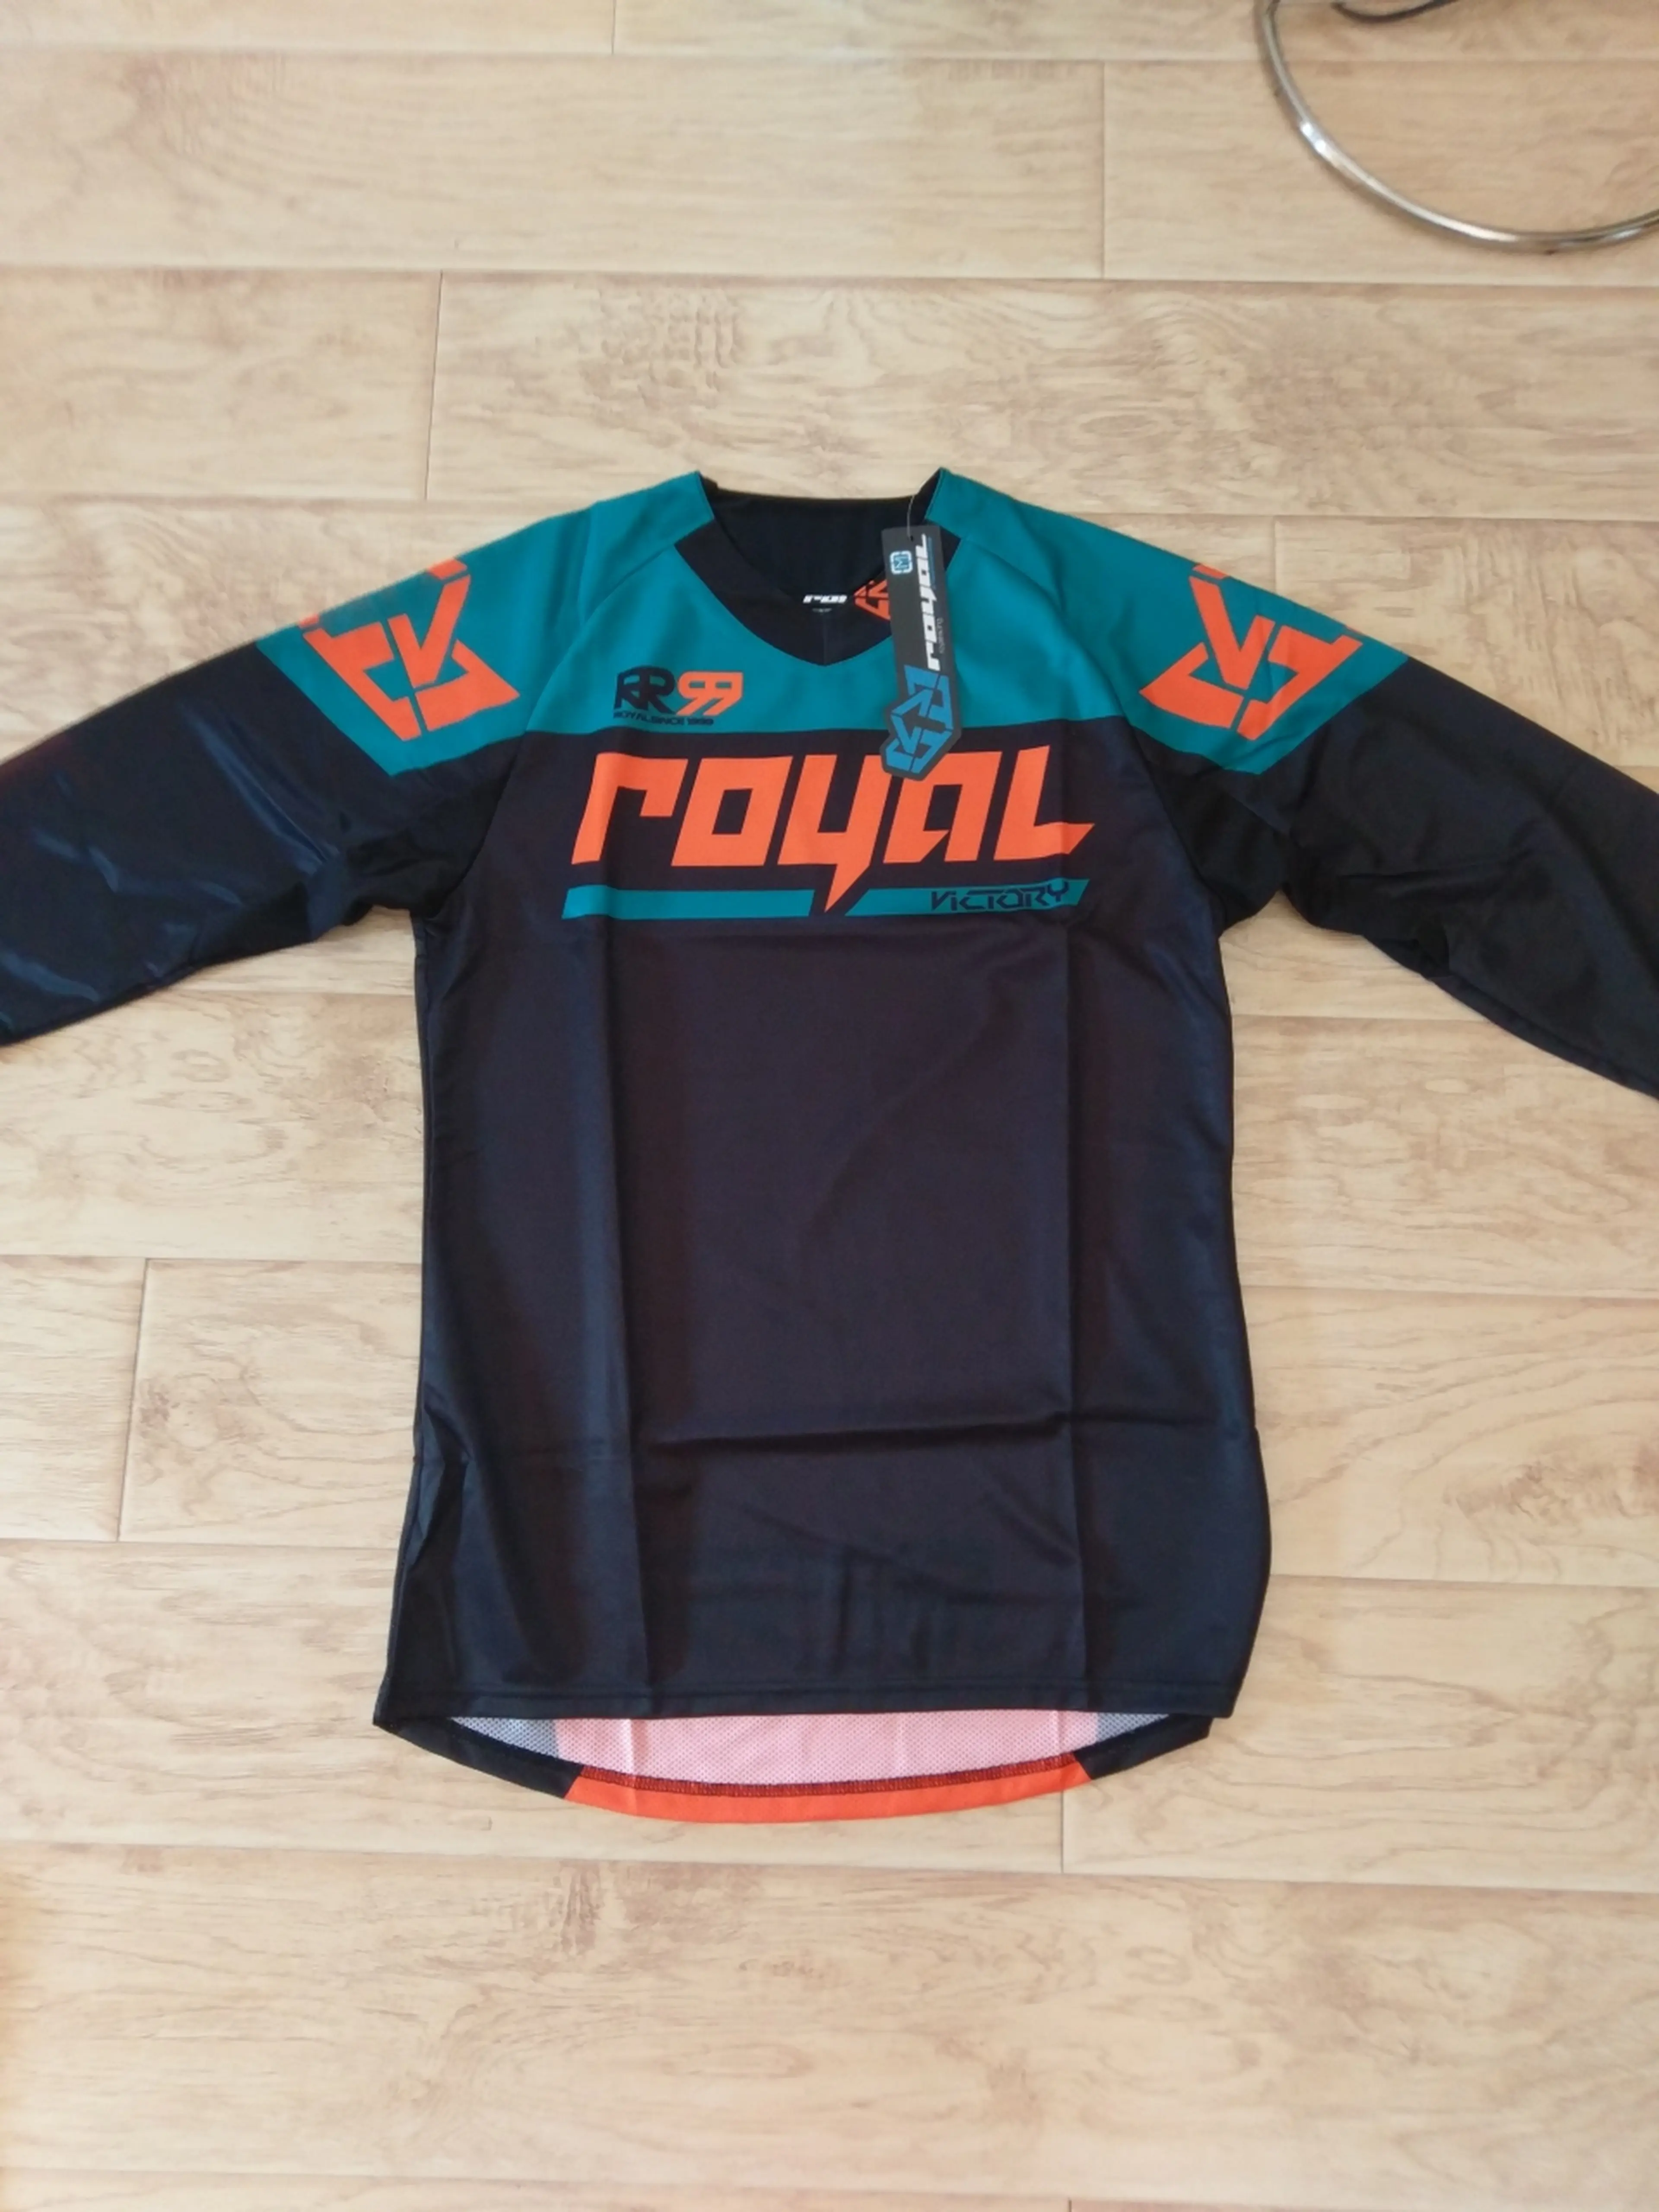 1. Jersey Downhill/Enduro Royal Racing Victory Race LS Black Teal Orange